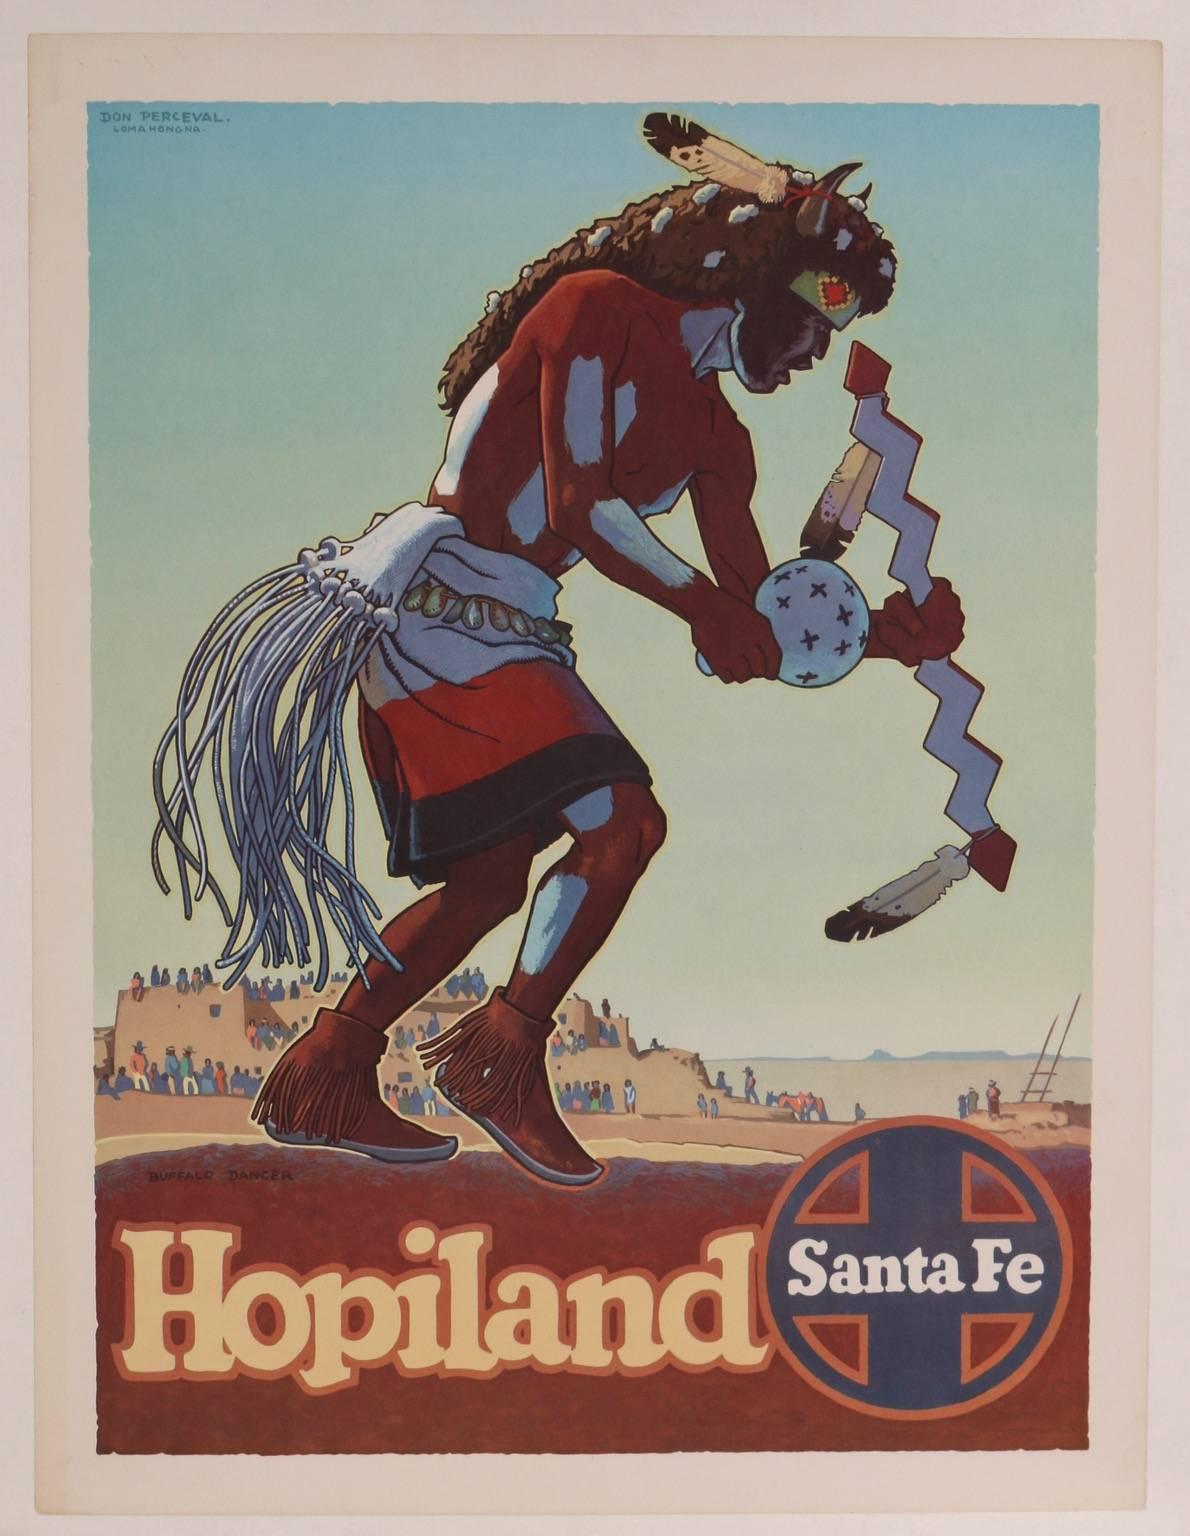 American Set of Five Original 1940s Santa Fe Railroad Travel Posters